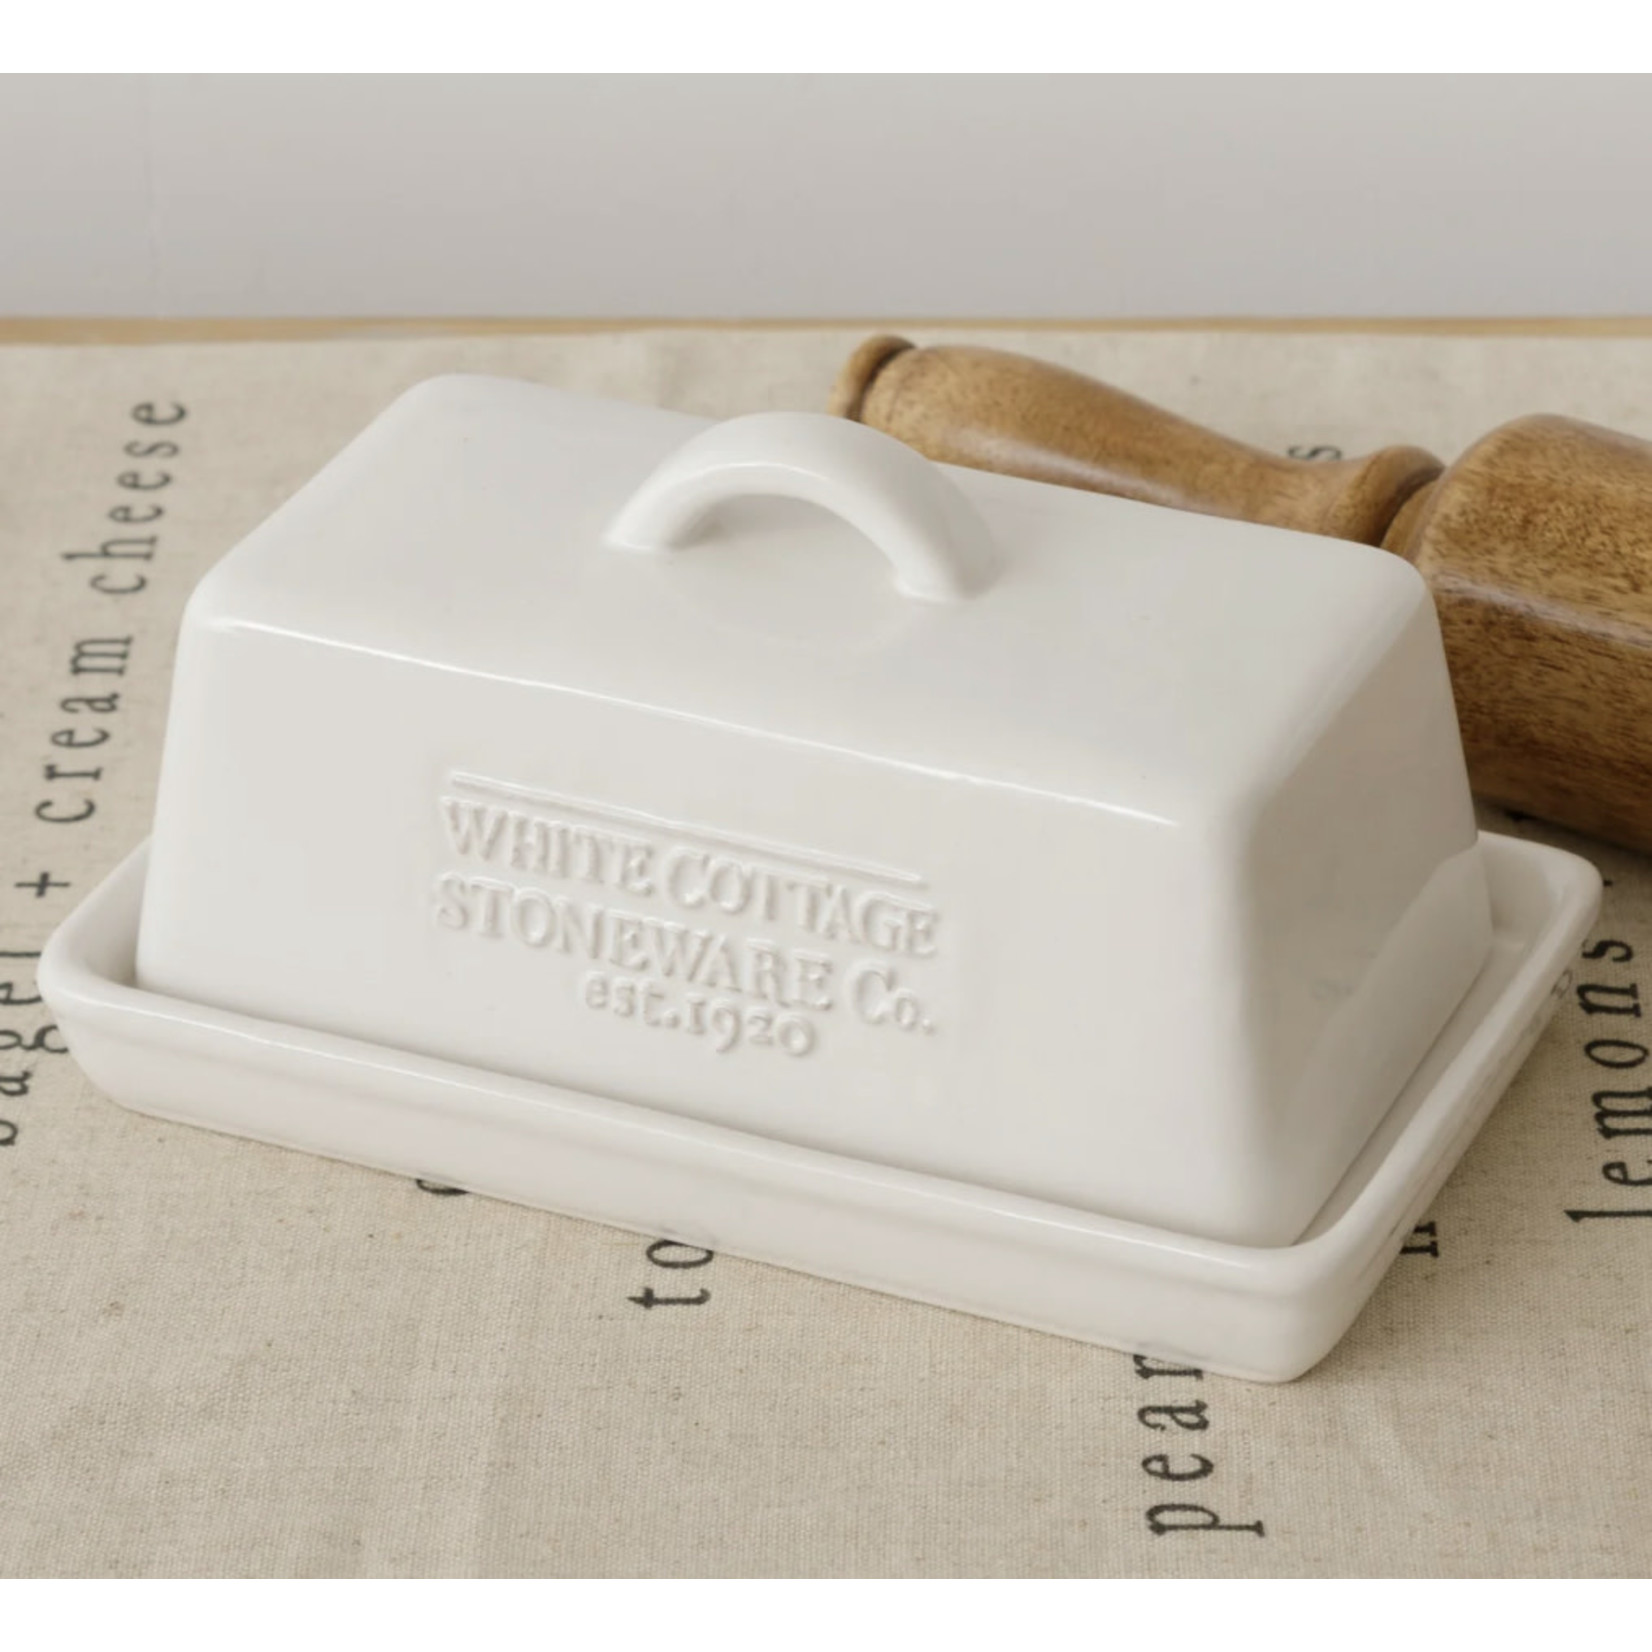 Audrey’s White Cottage Ceramic Butter Dish